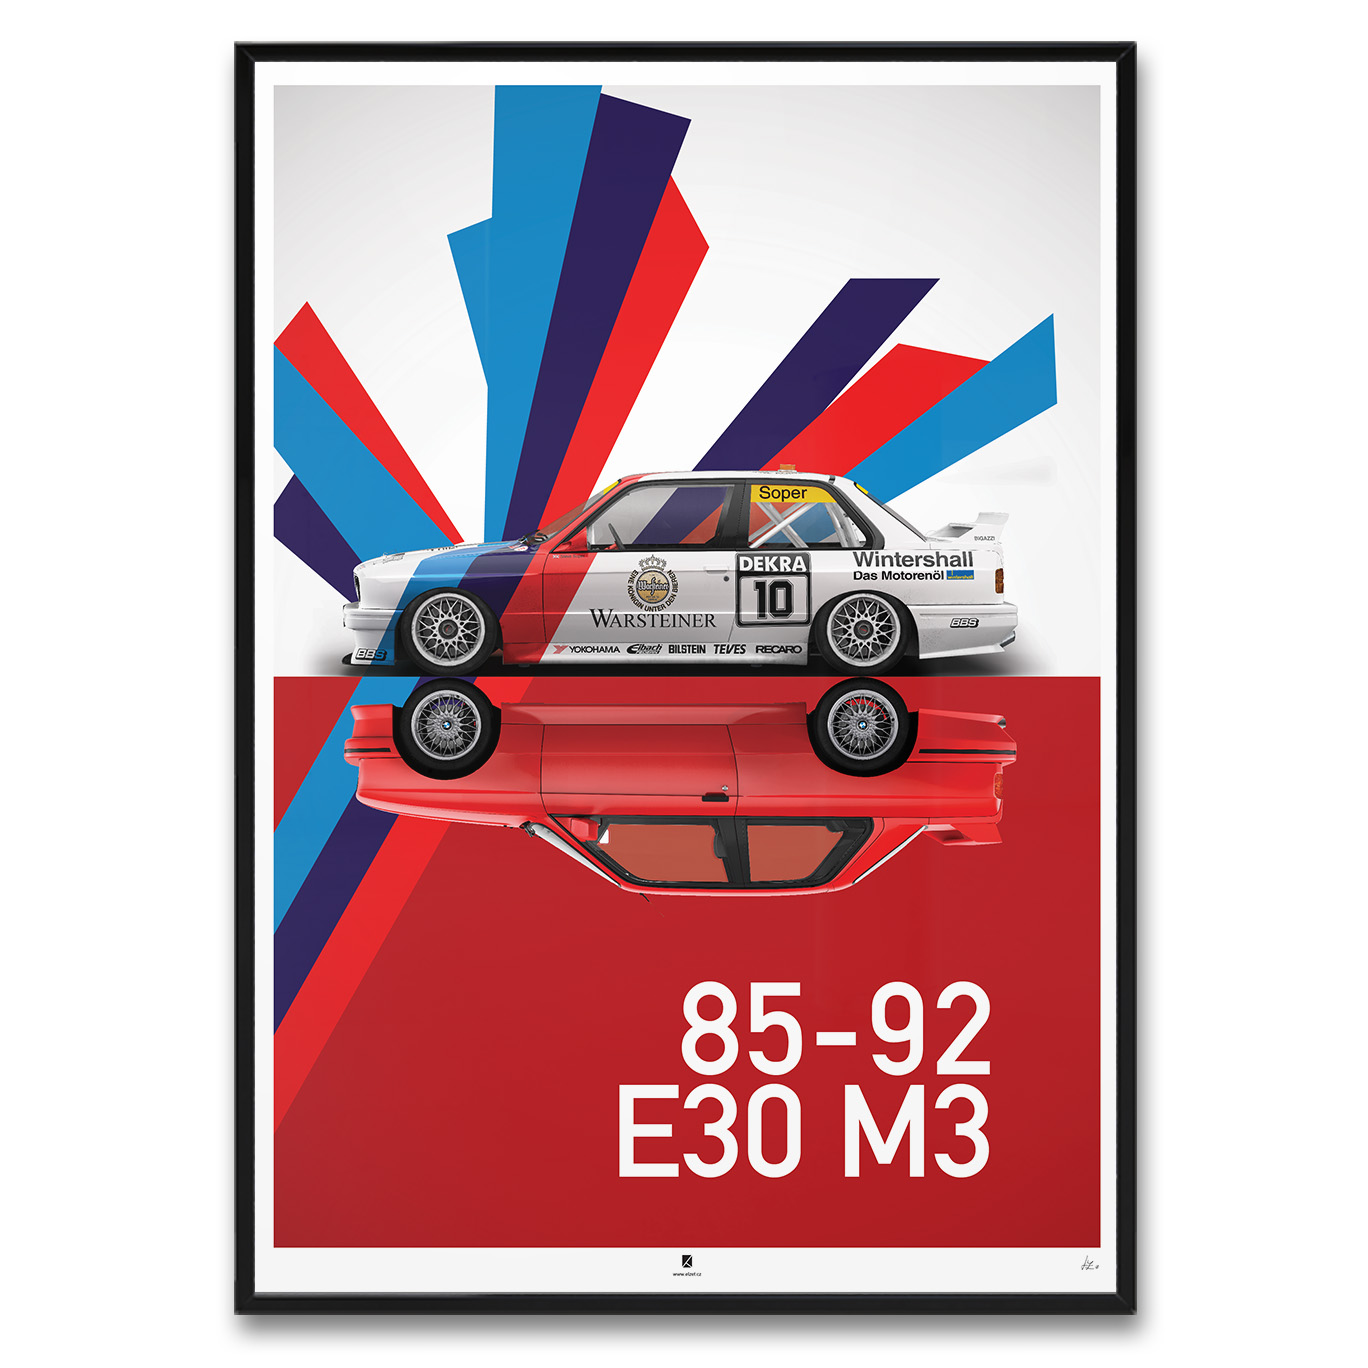 ORIGINAL TEILE & ZUBEHÖR BMW M3 ORIGINAL VINTAGE MINT BMW M3 E30 POSTER 26